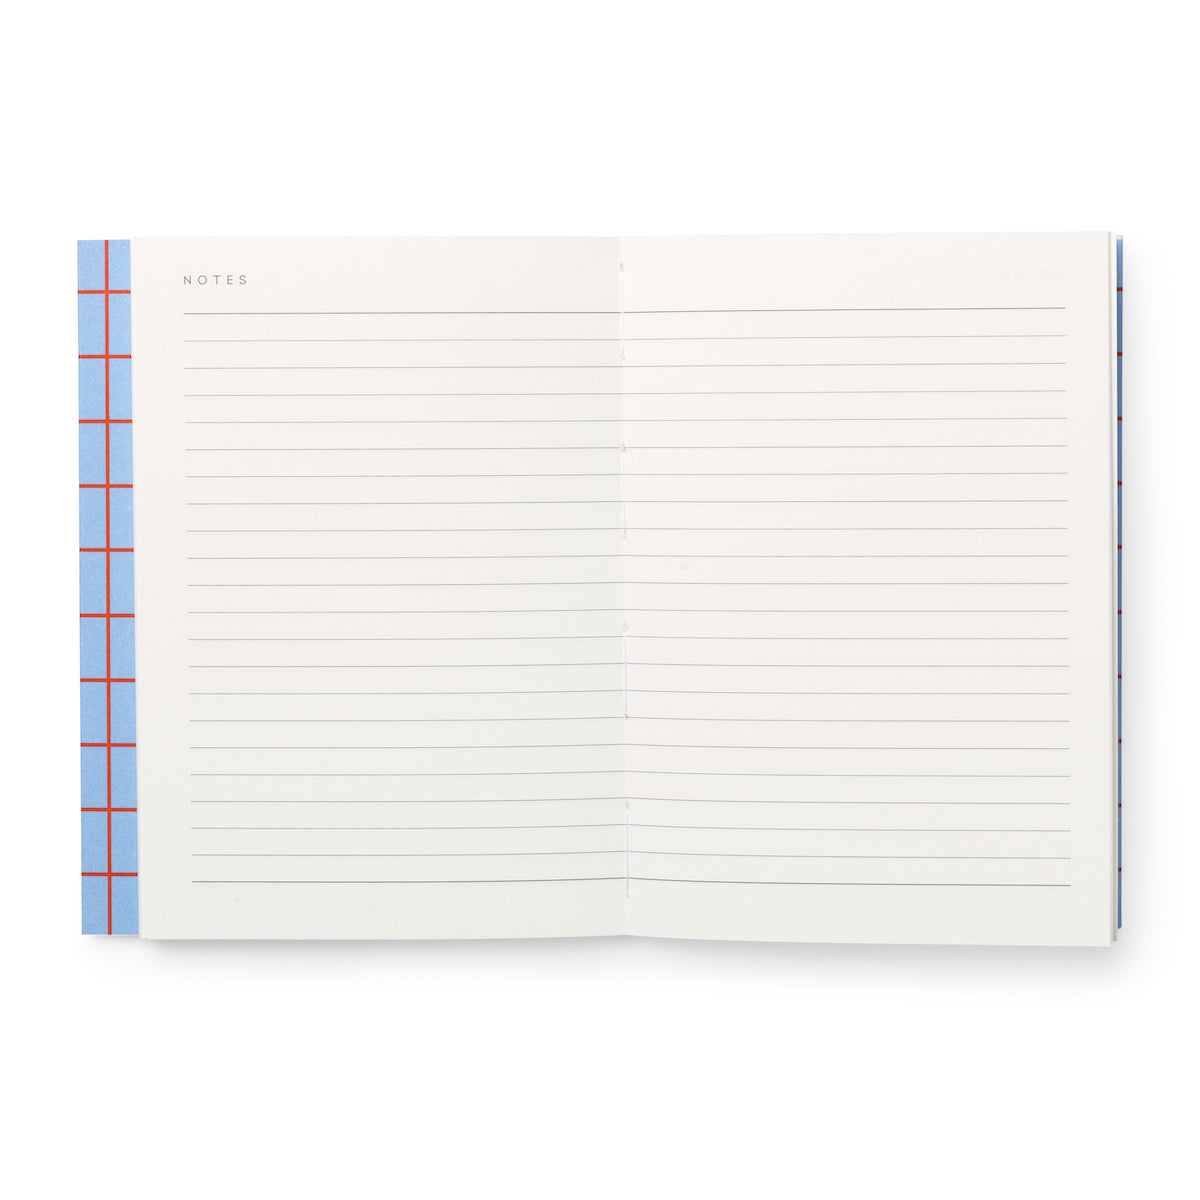 NOTEM UMA Flat-Lay Notebook, Small - Light Blue